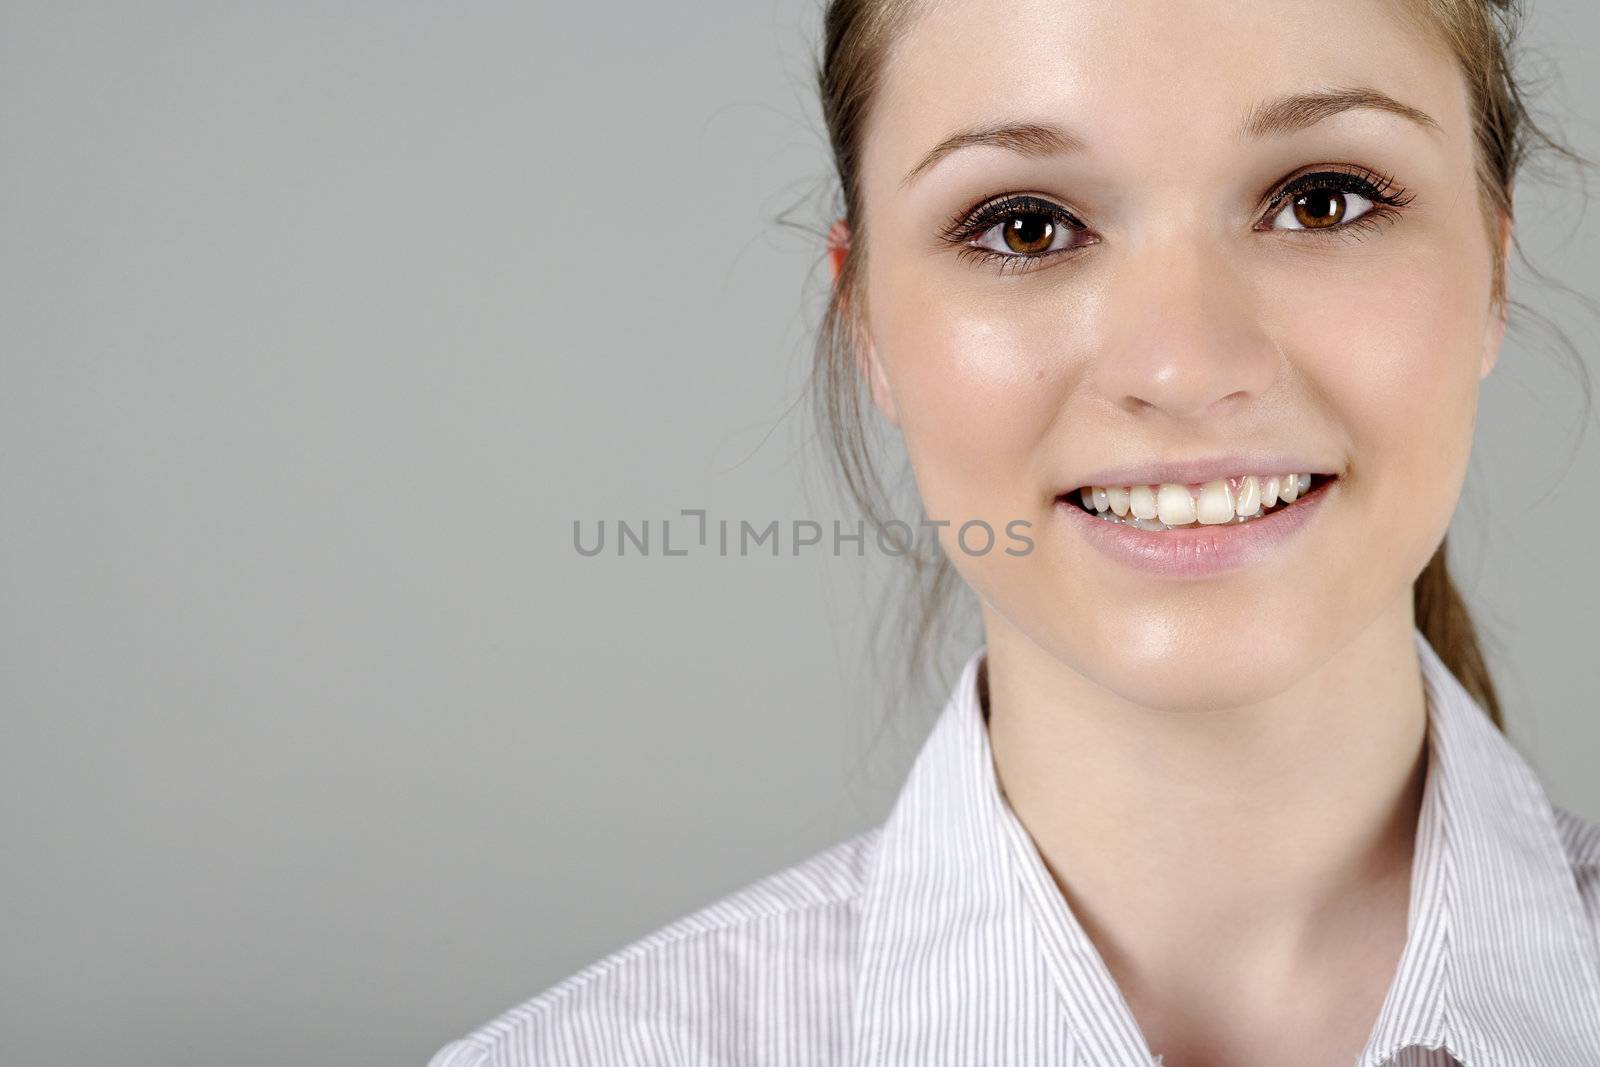 Young woman in smart shirt facing the camera